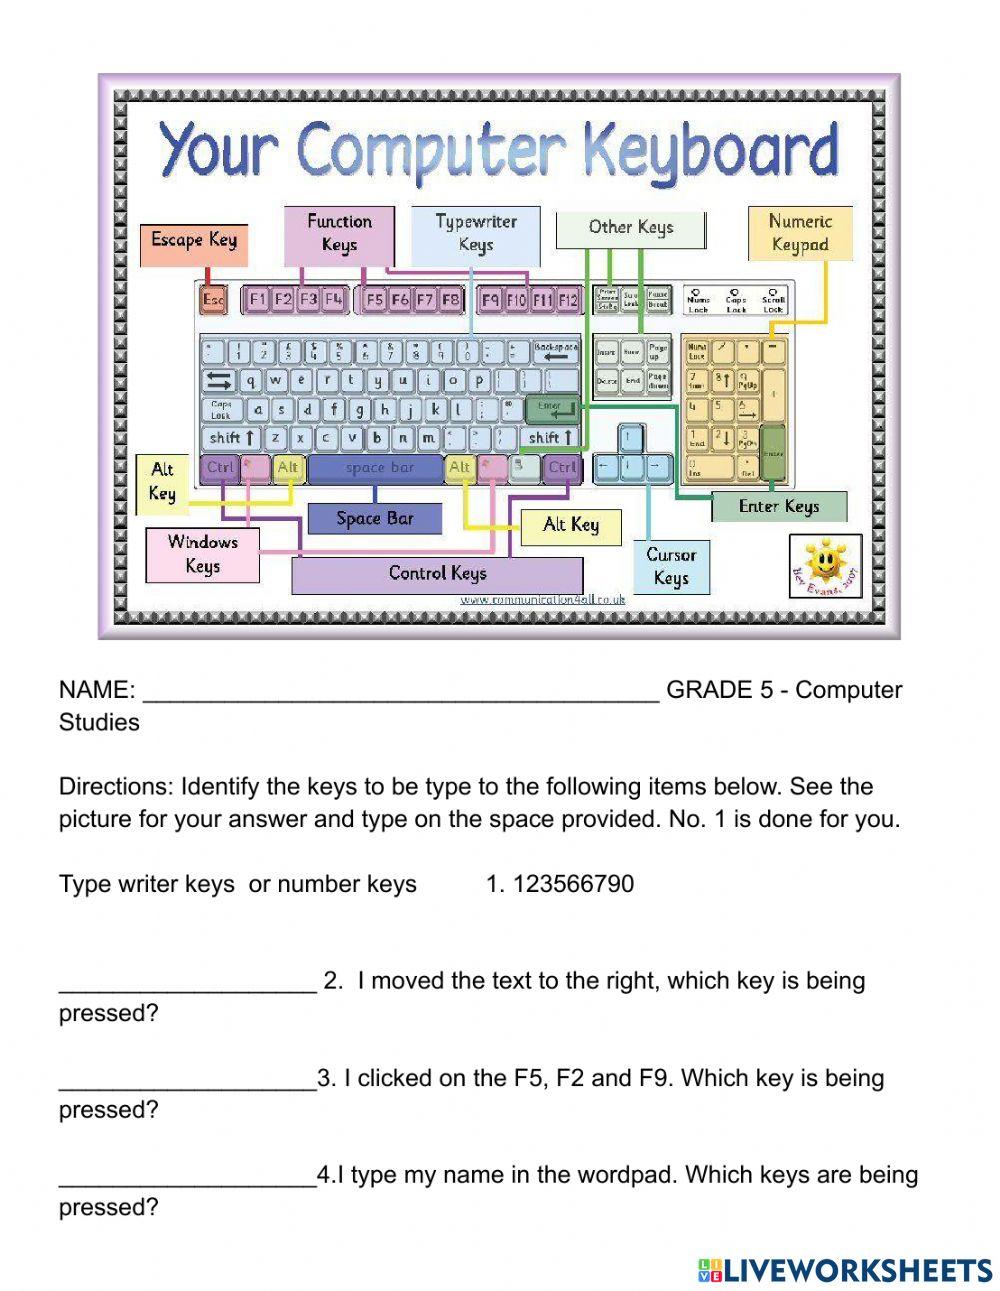 Gr.5 Comp Studies keyboard basic